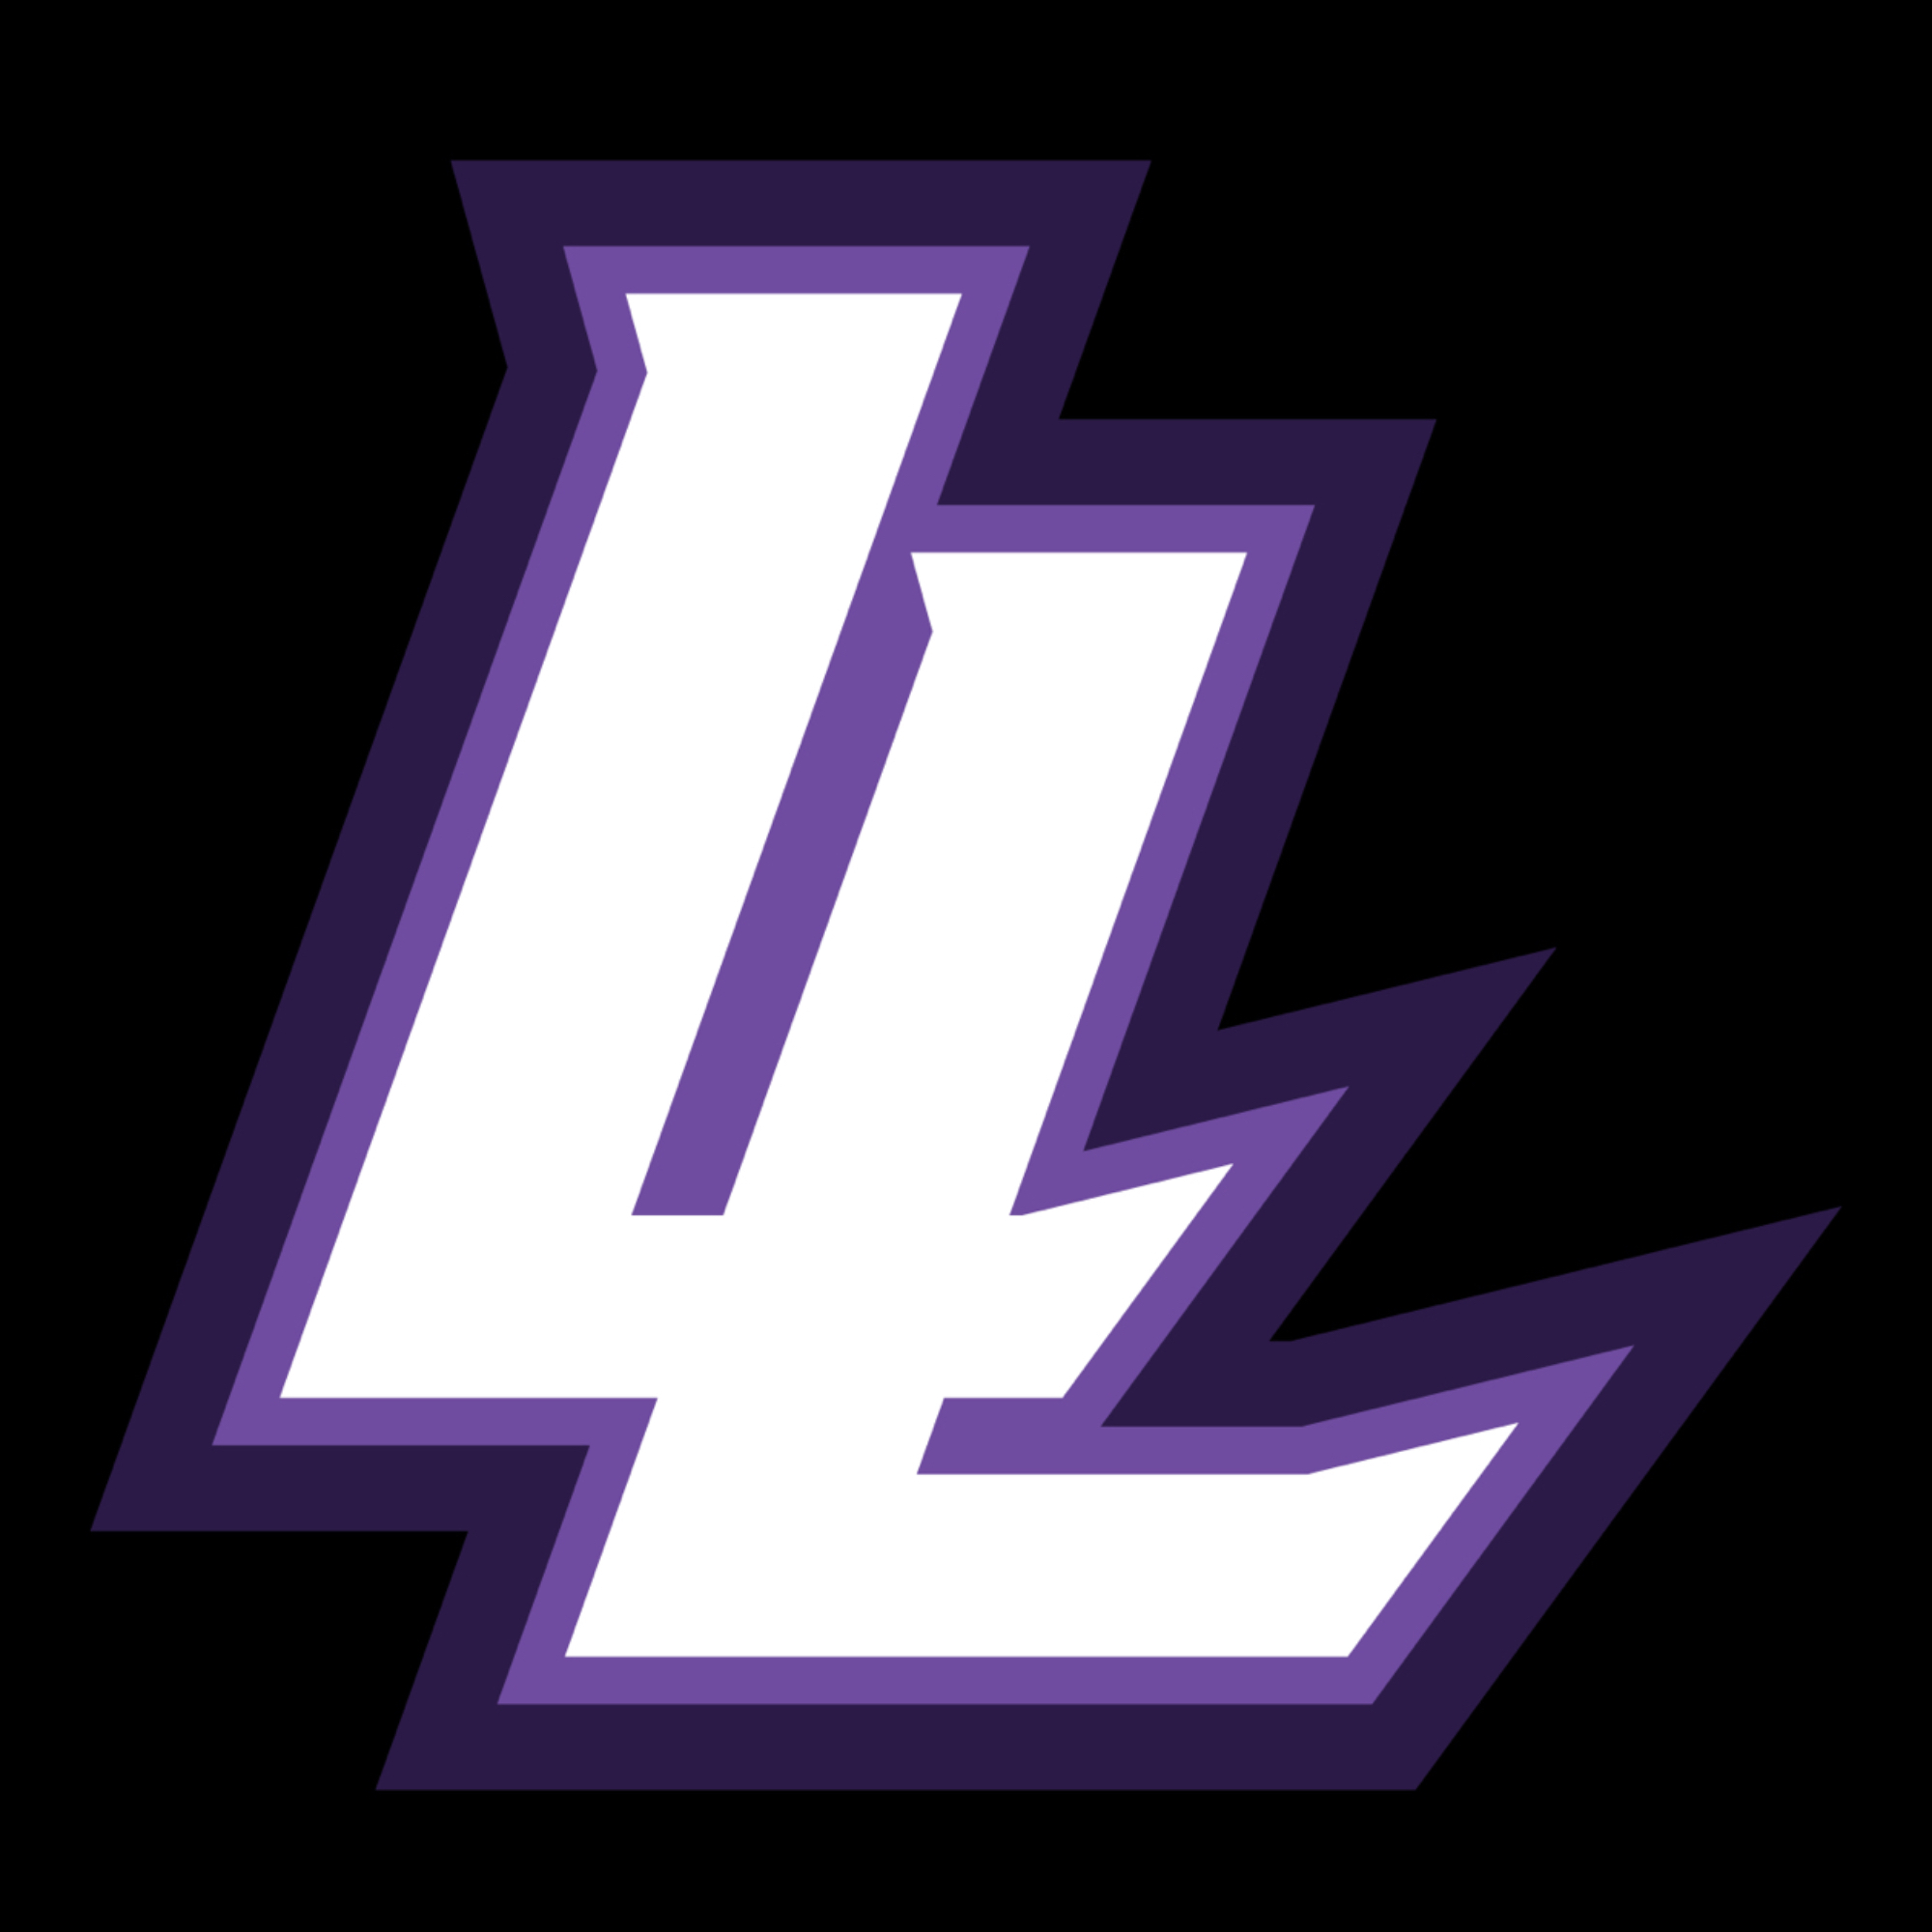 Organization logo for Lady Legends